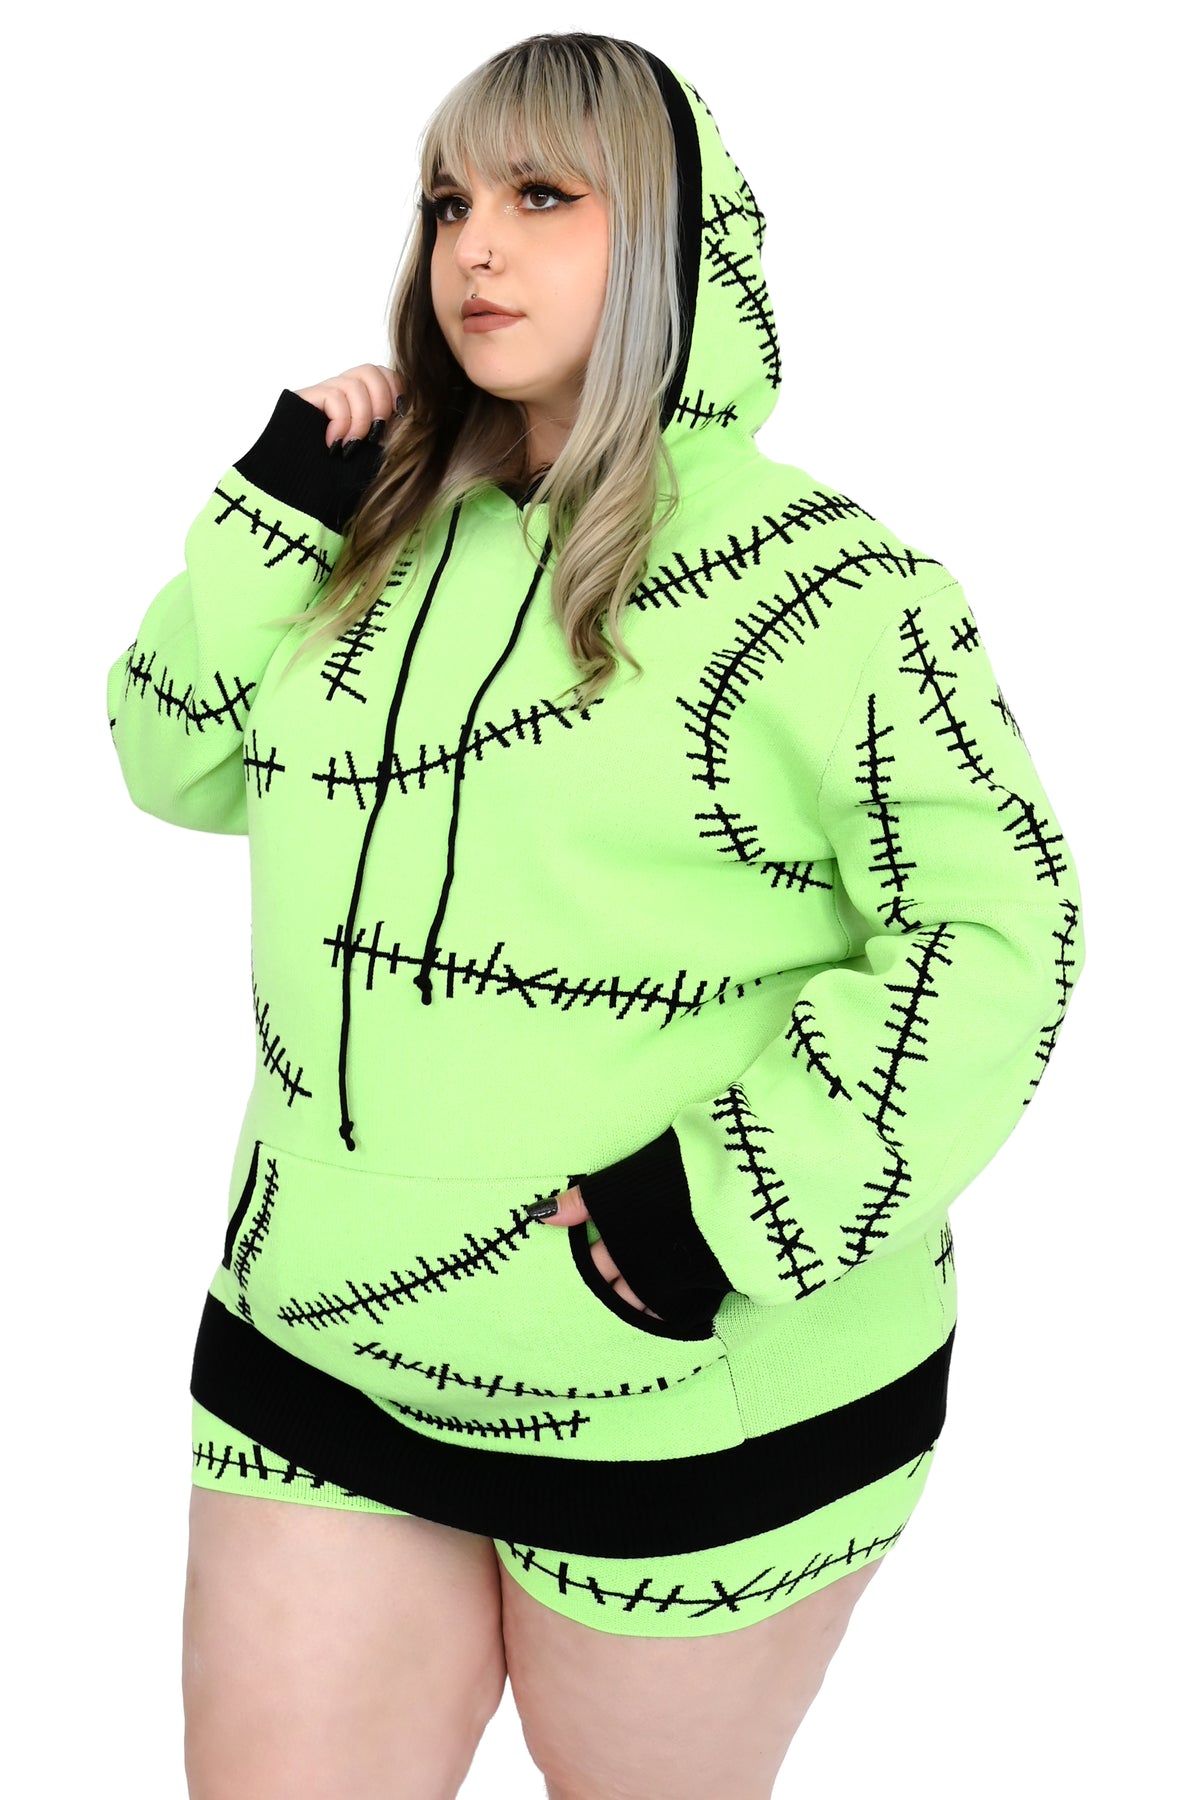 glow in the dark green hoodie with black stitches pattern